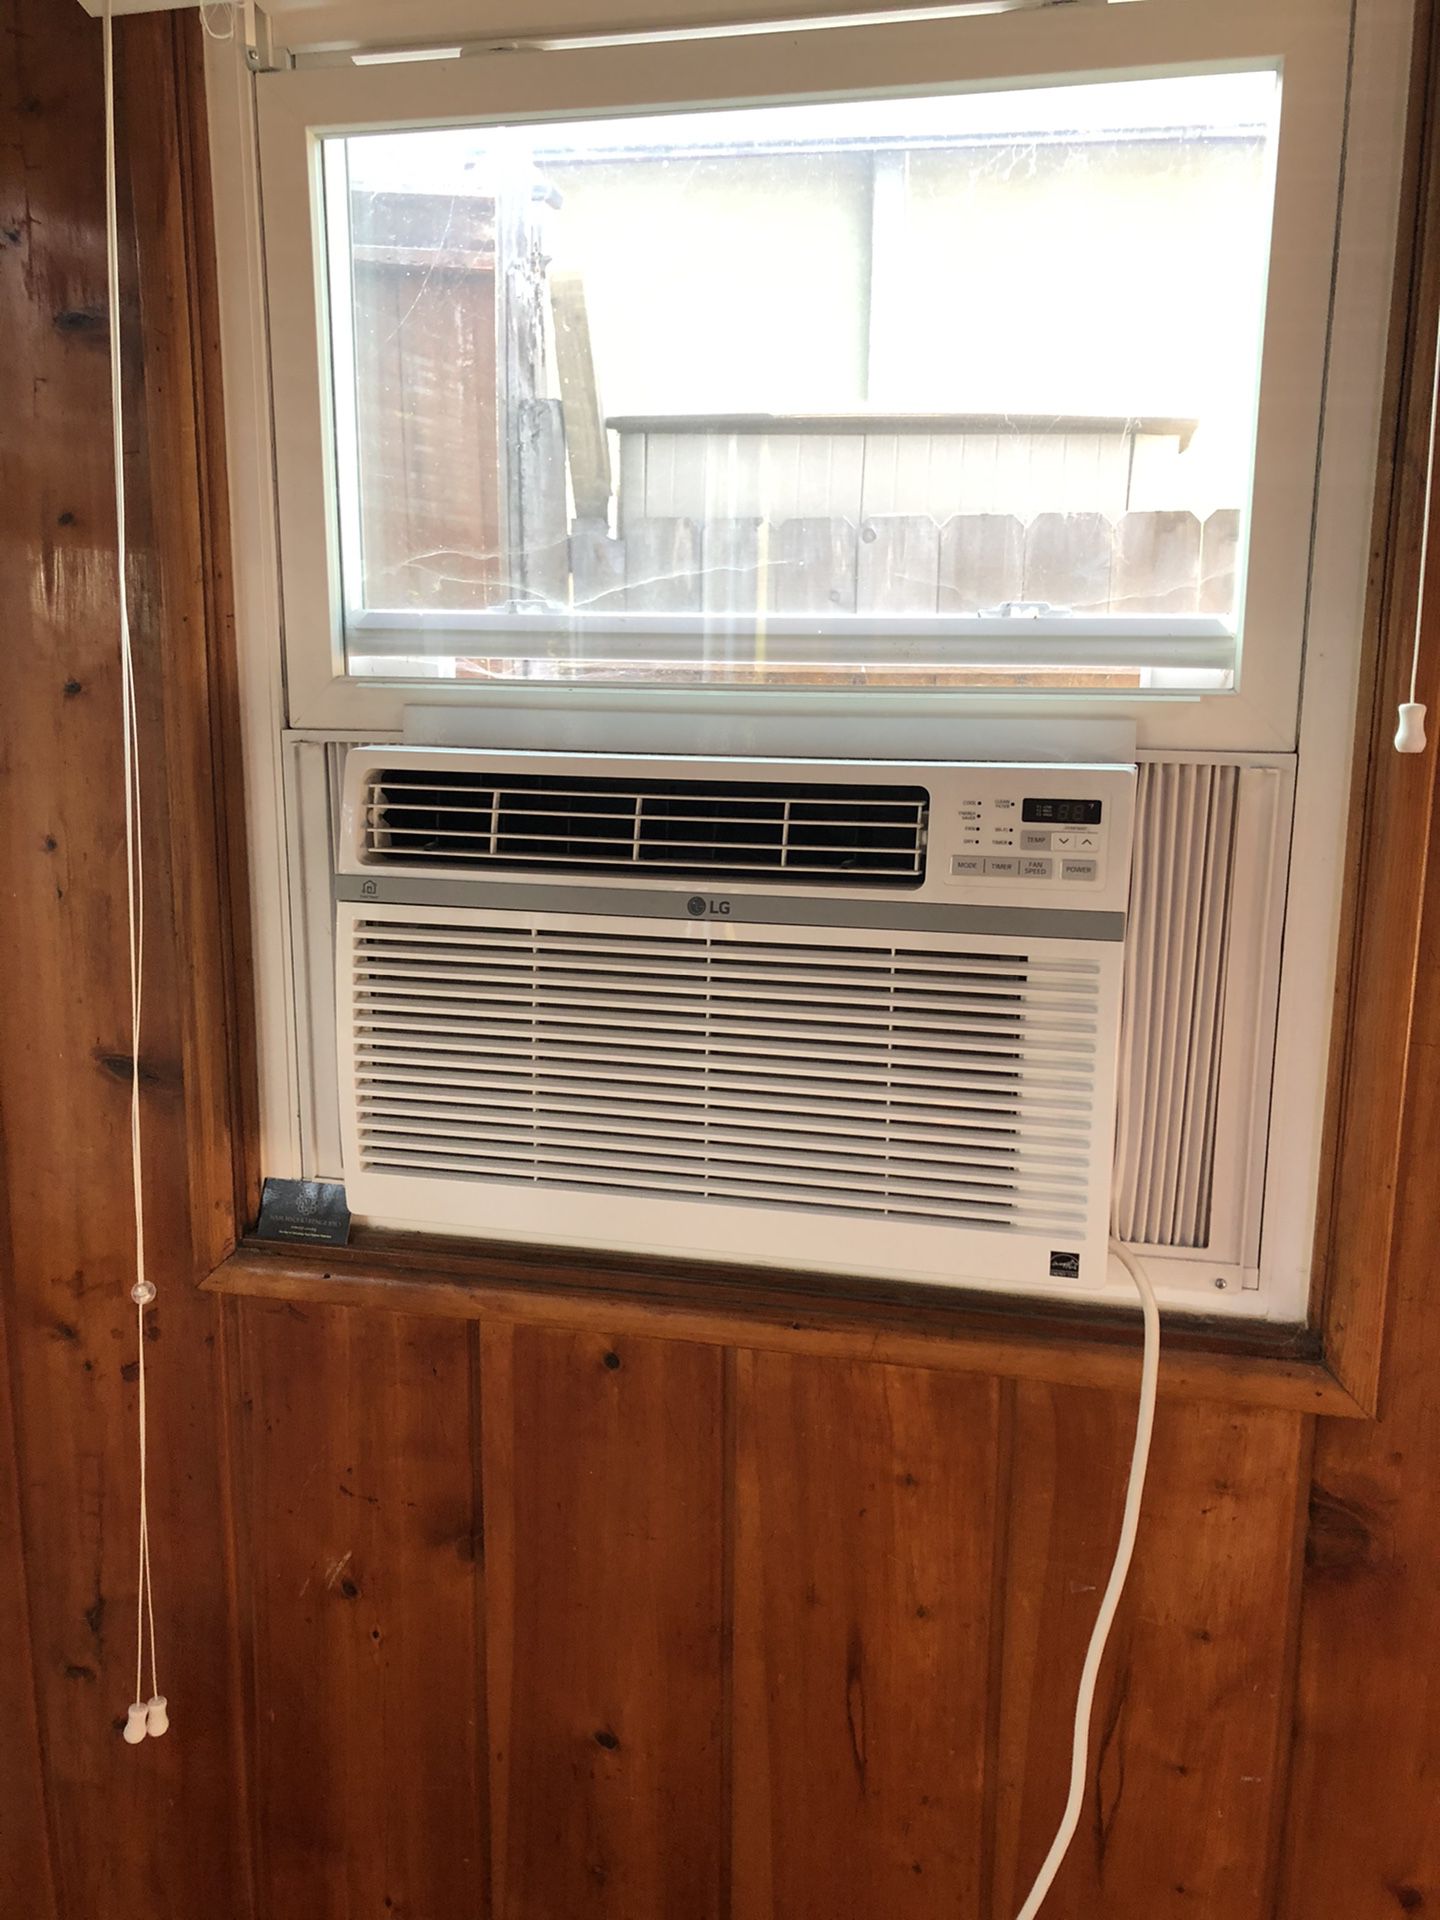 LG window AC unit